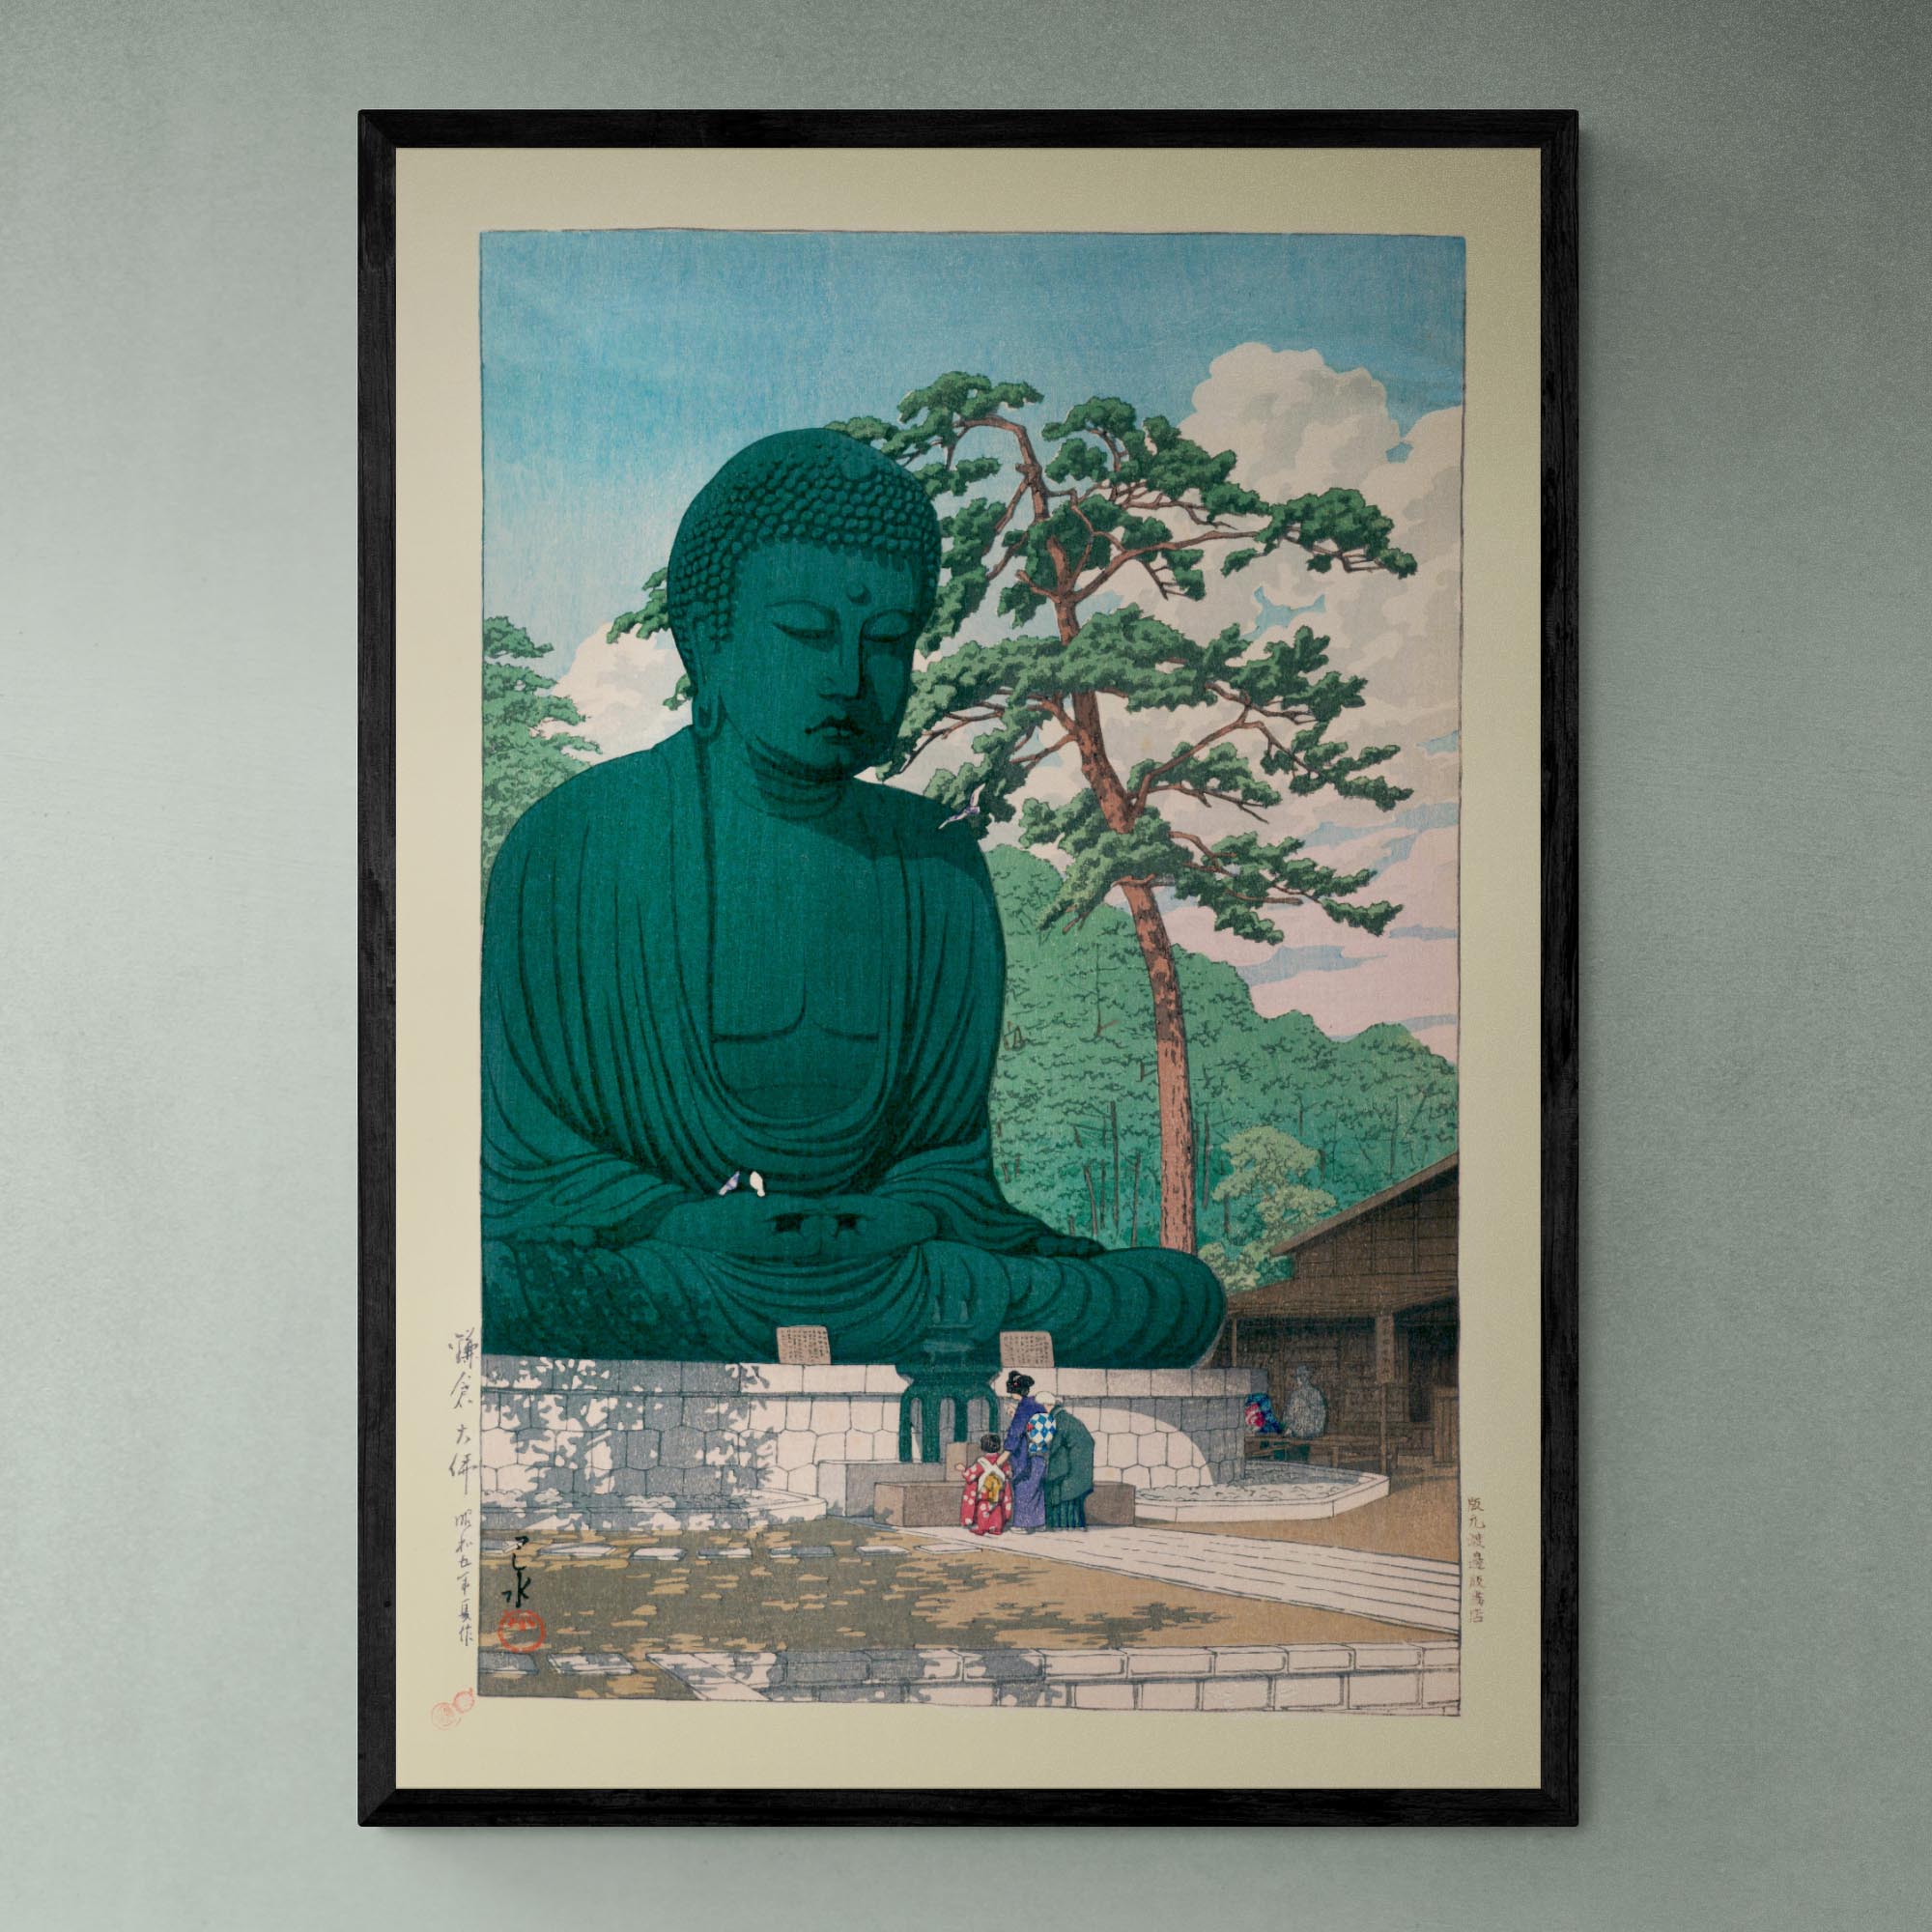 Framed Print 8"x12" / Black Frame The Great Buddha of Kamakura (Kawase Hasui) Japanese Edo Woodblock Ukiyo-E Framed Art Print